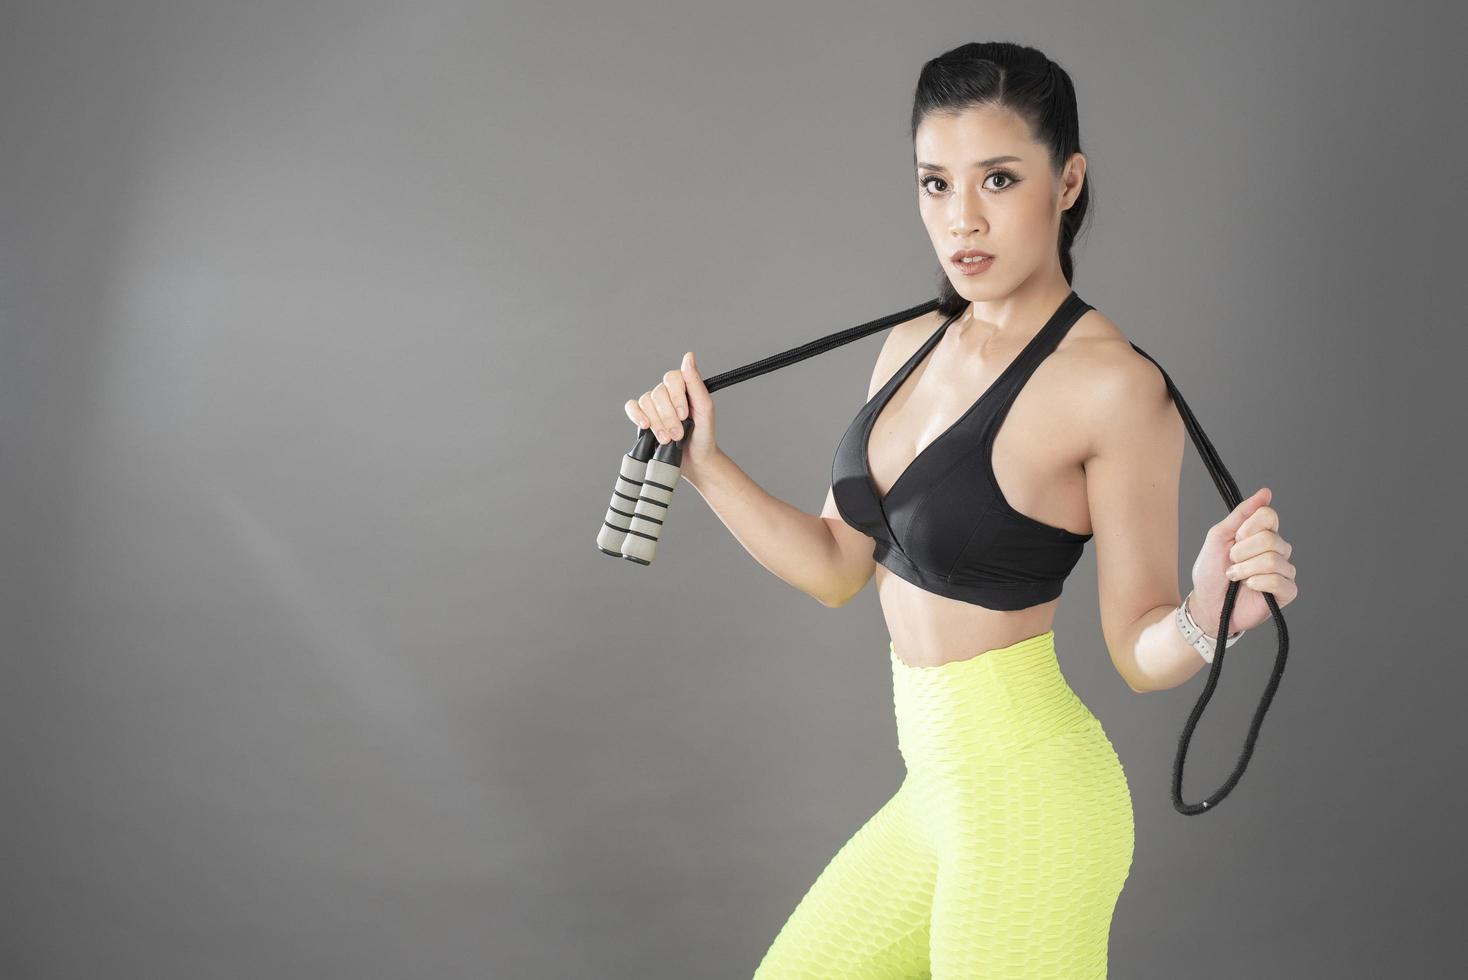 bella donna body builder fitness in studio foto